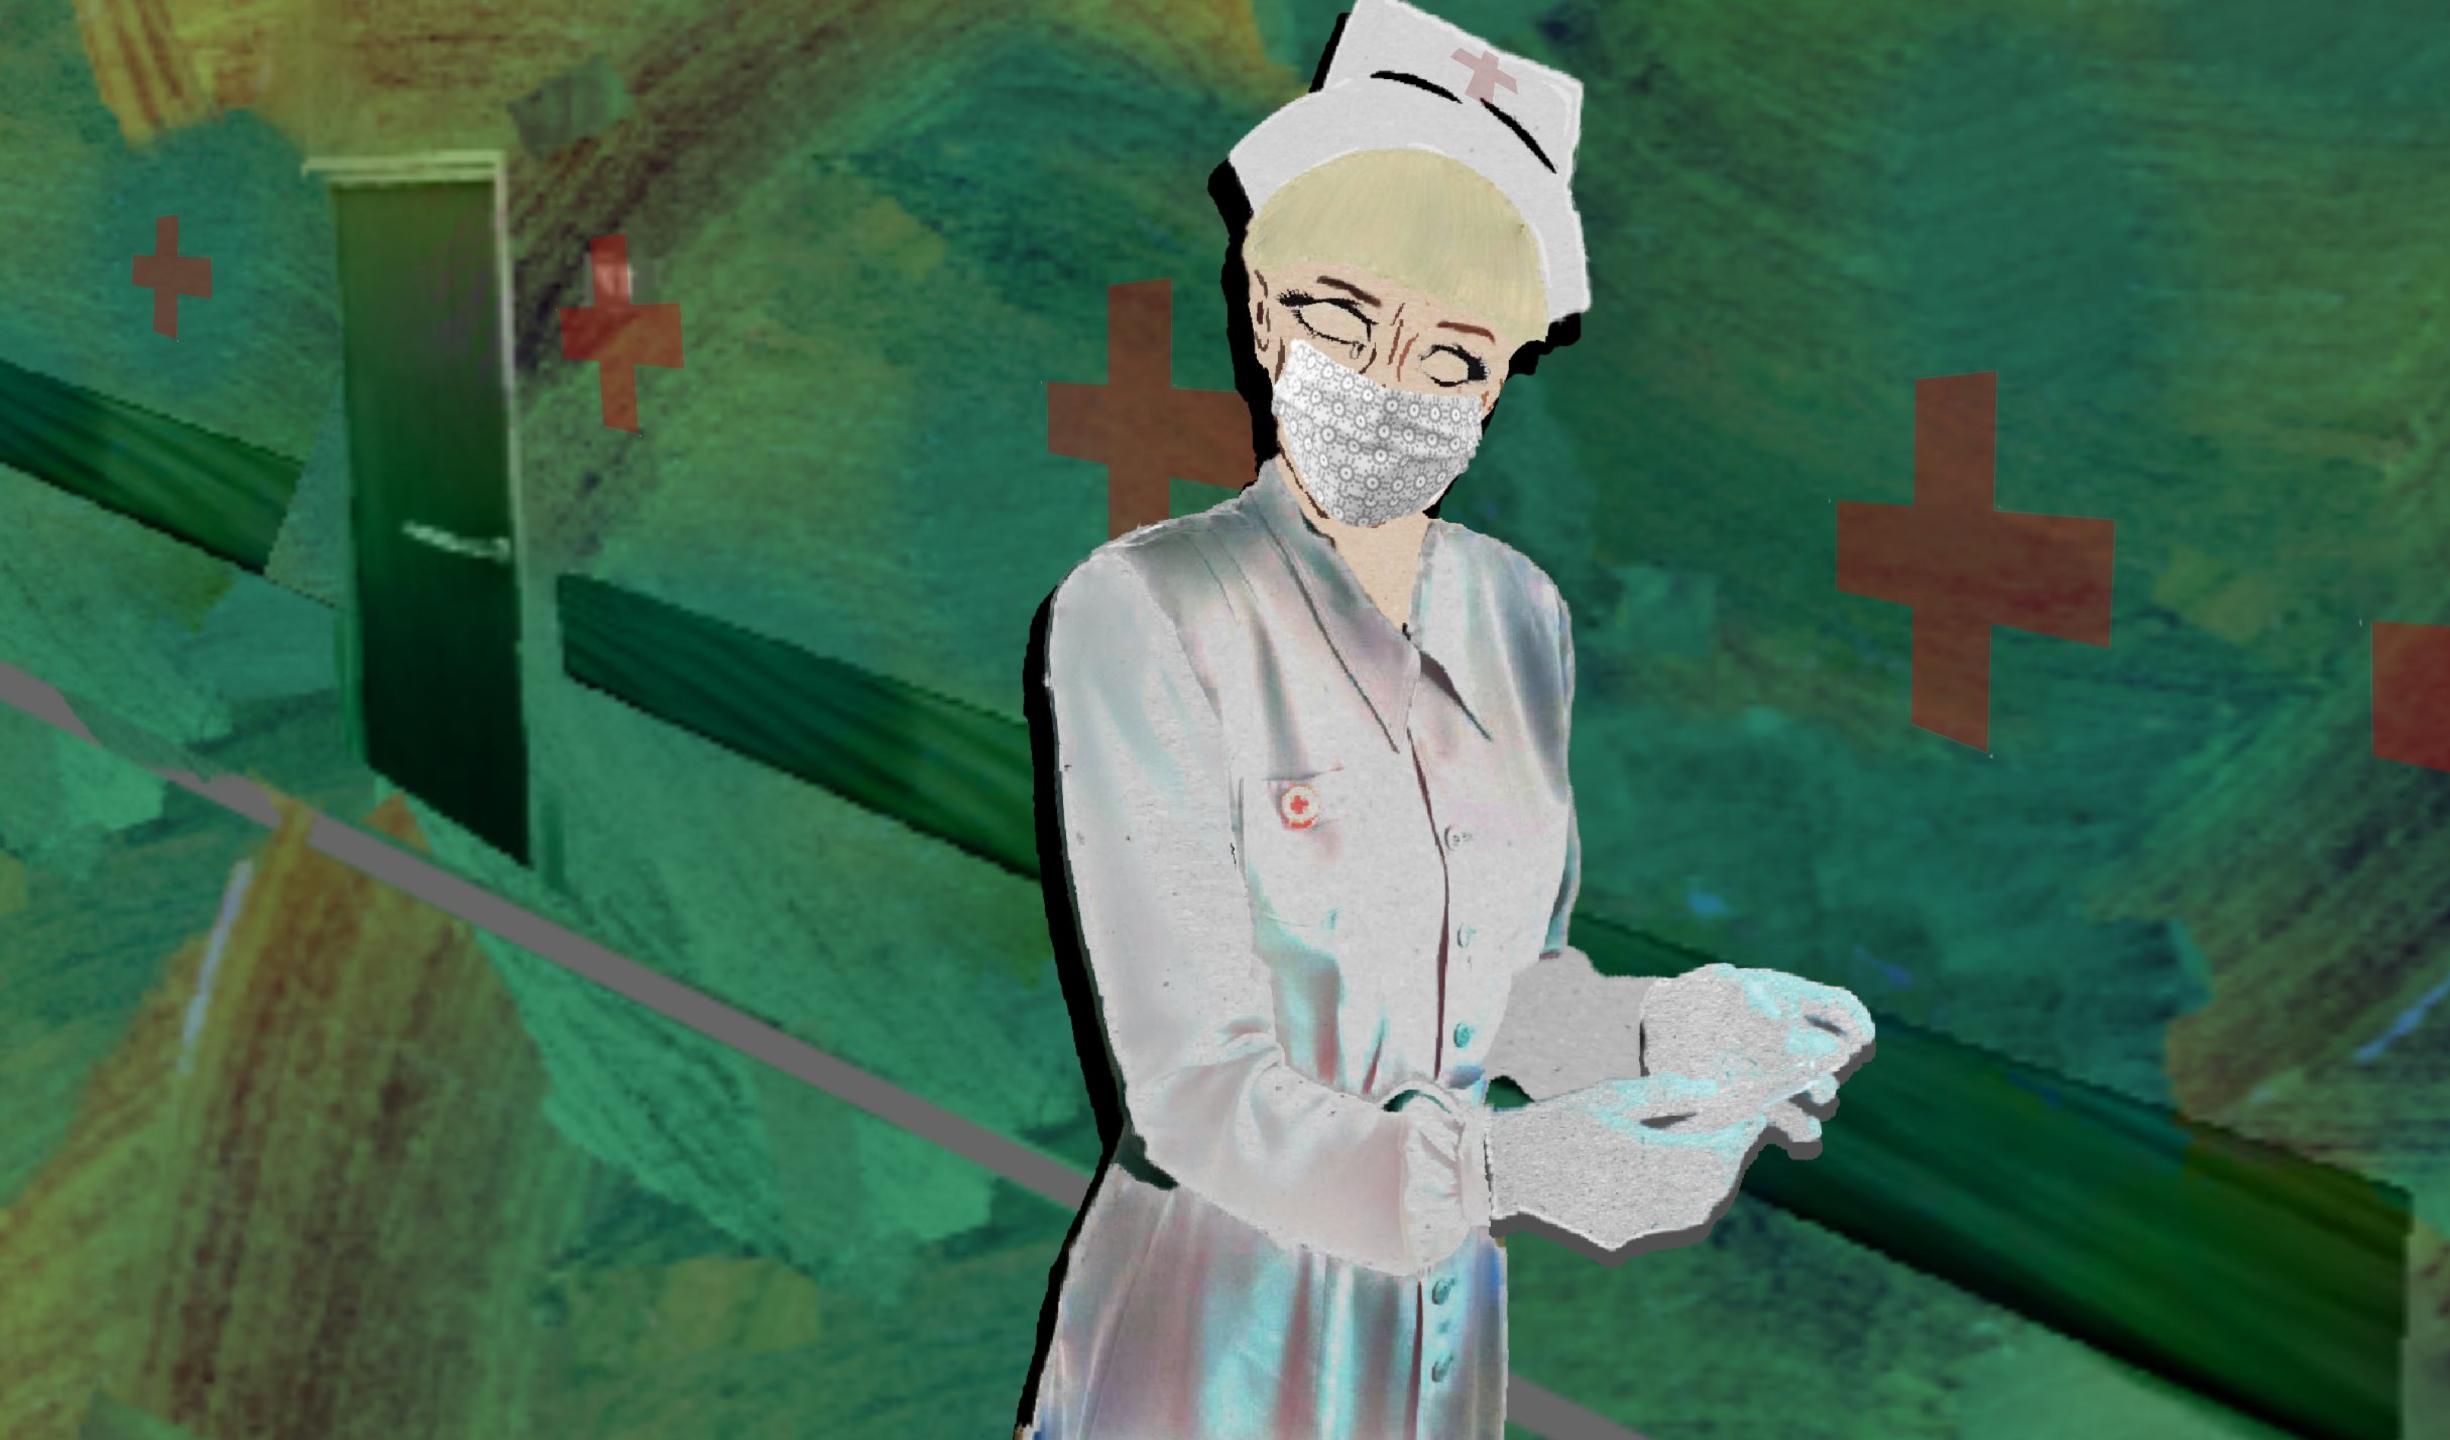 Nurse walks down a hallway with teal walls.